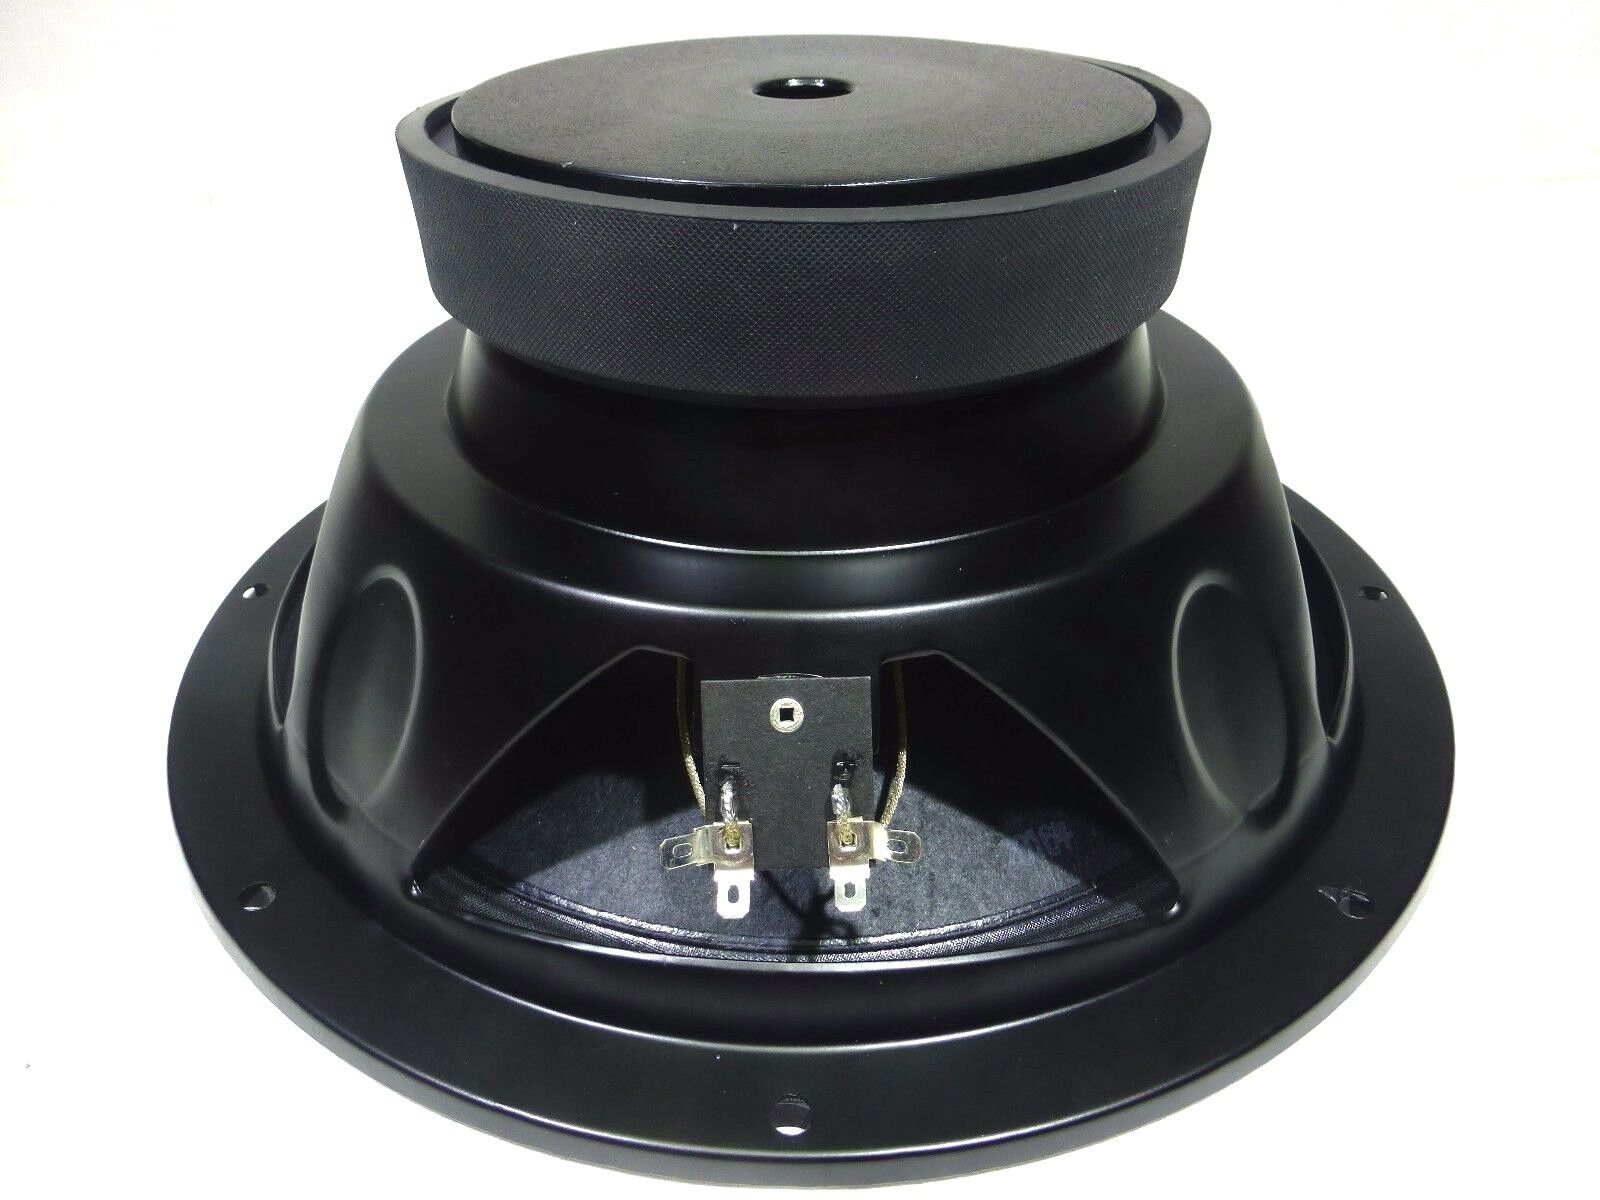 LASE 12.5" EVS-12K Aftermarket Replacement Speaker